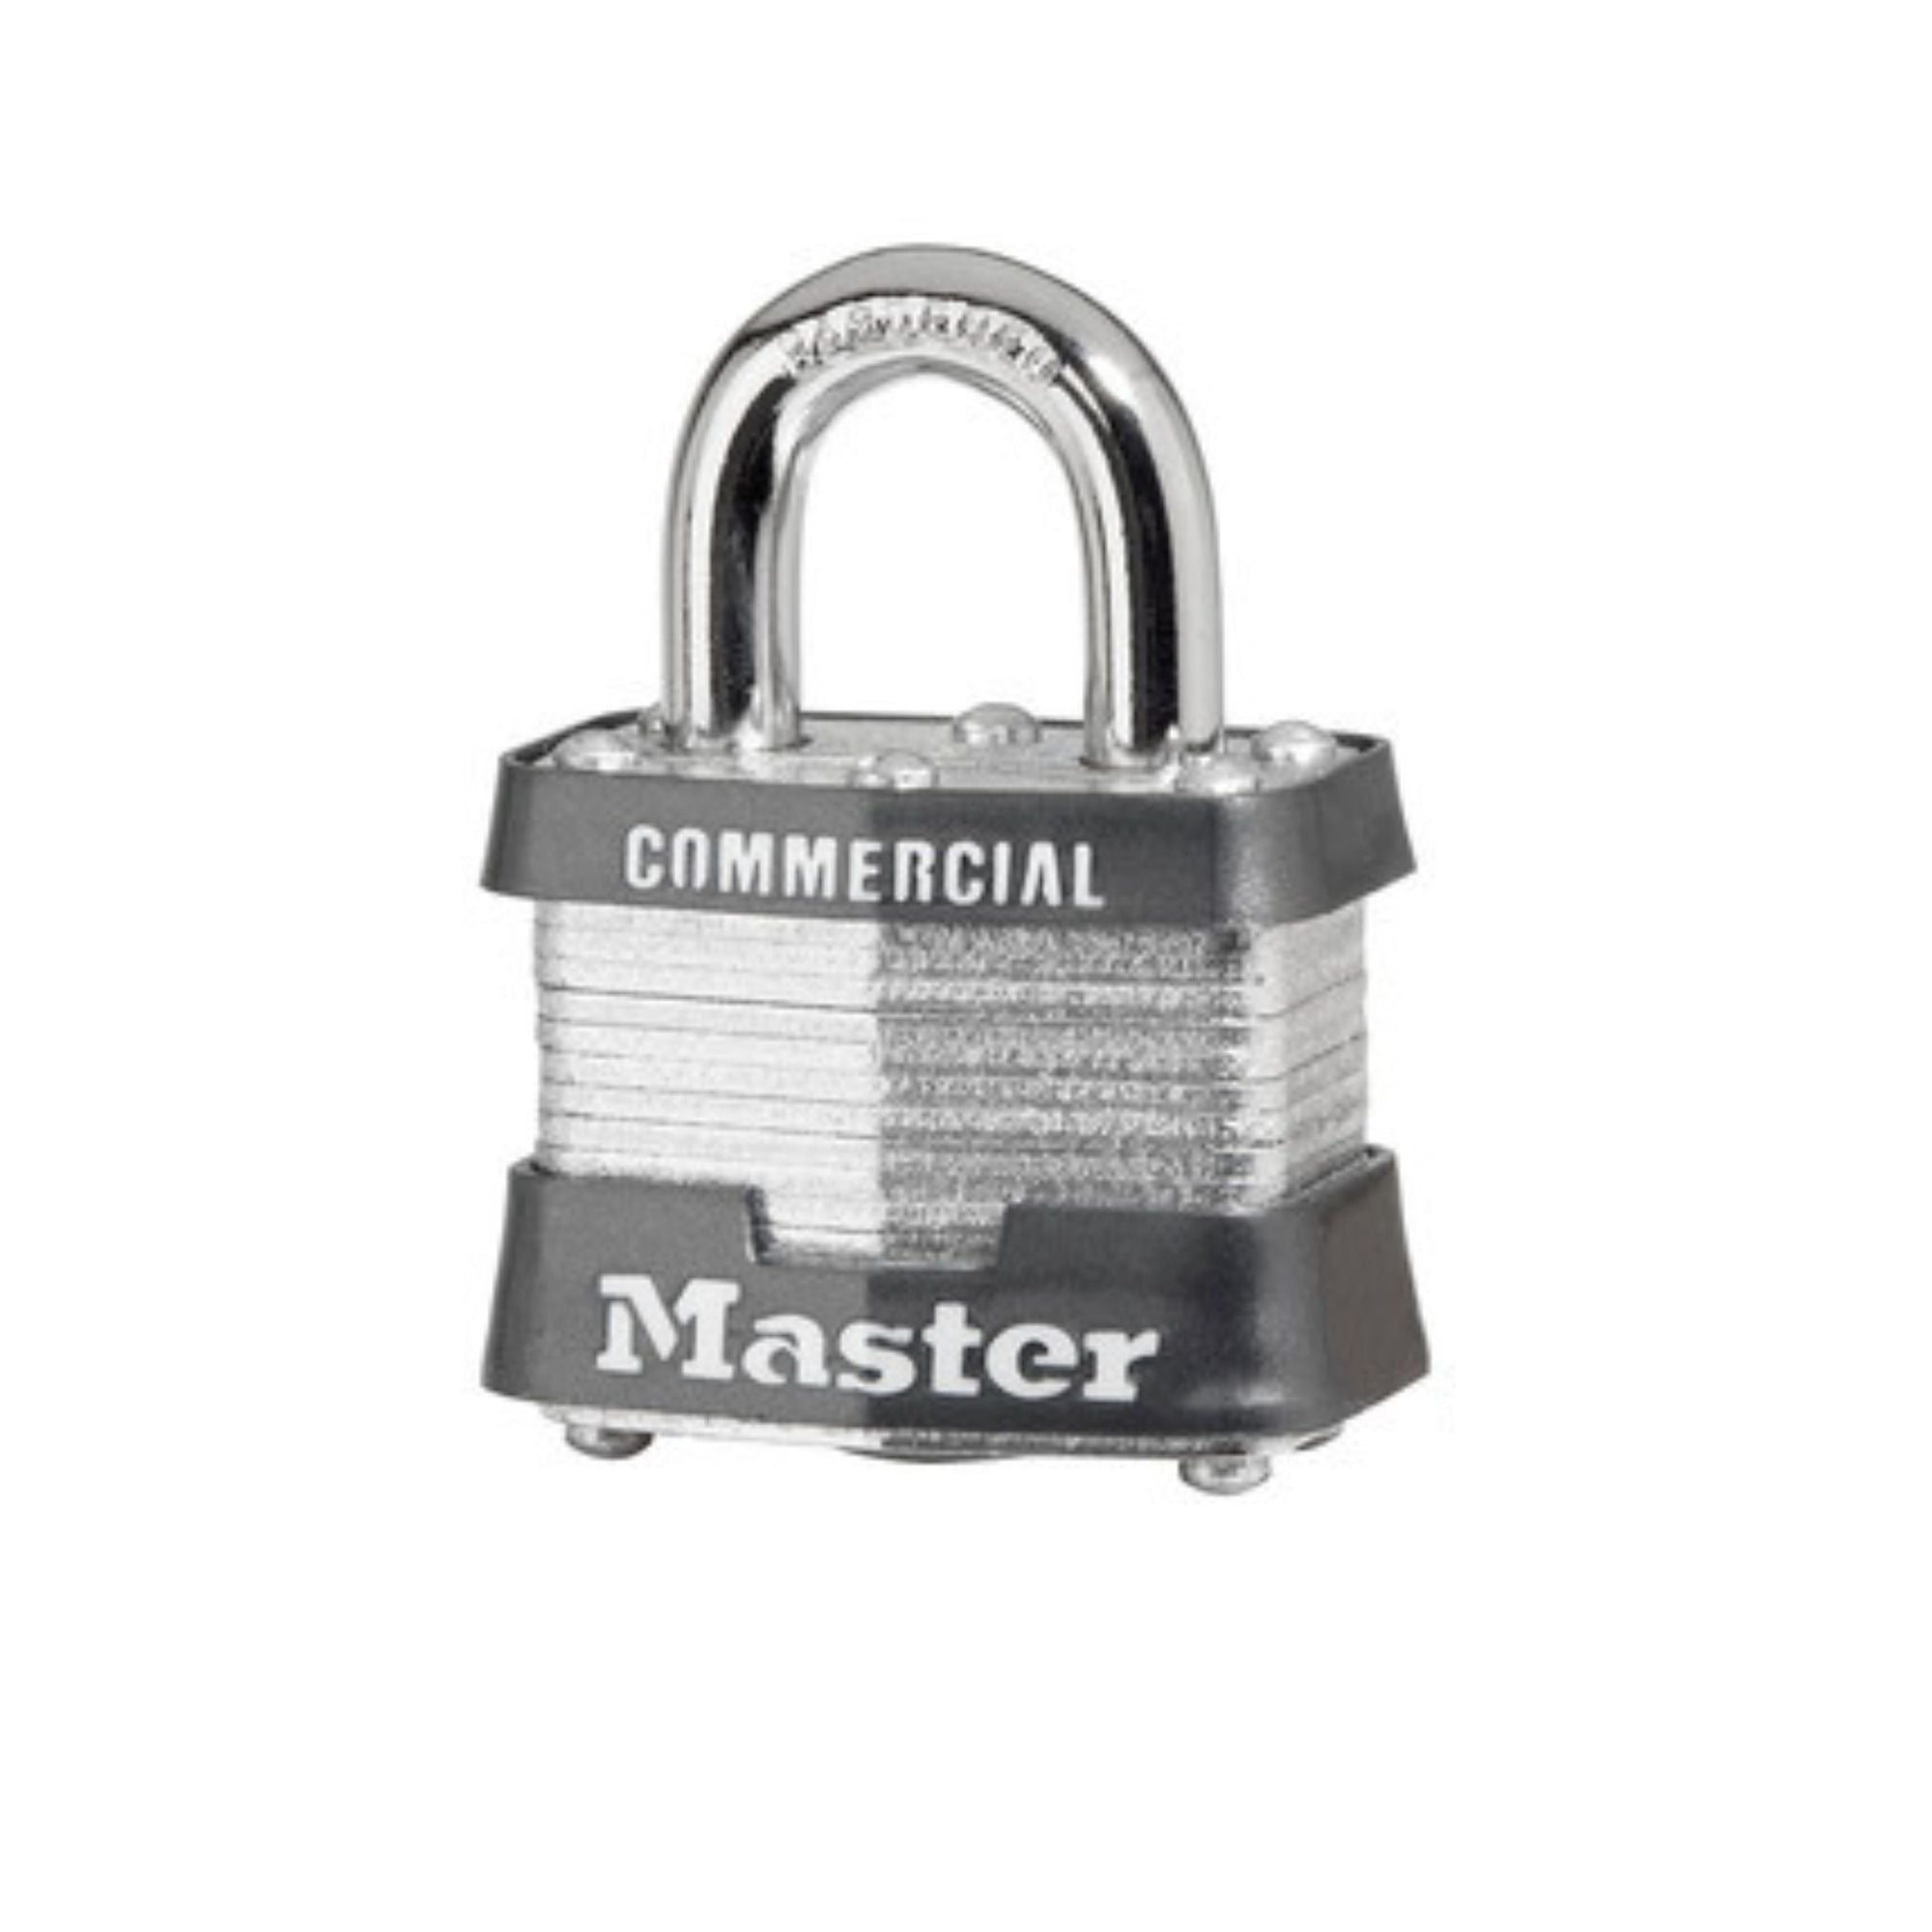 Master Lock 3KA 0315 Lock Laminated steel No. 3 Series Padlock Keyed to Match Existing Key Number KA0315 - The Lock Source